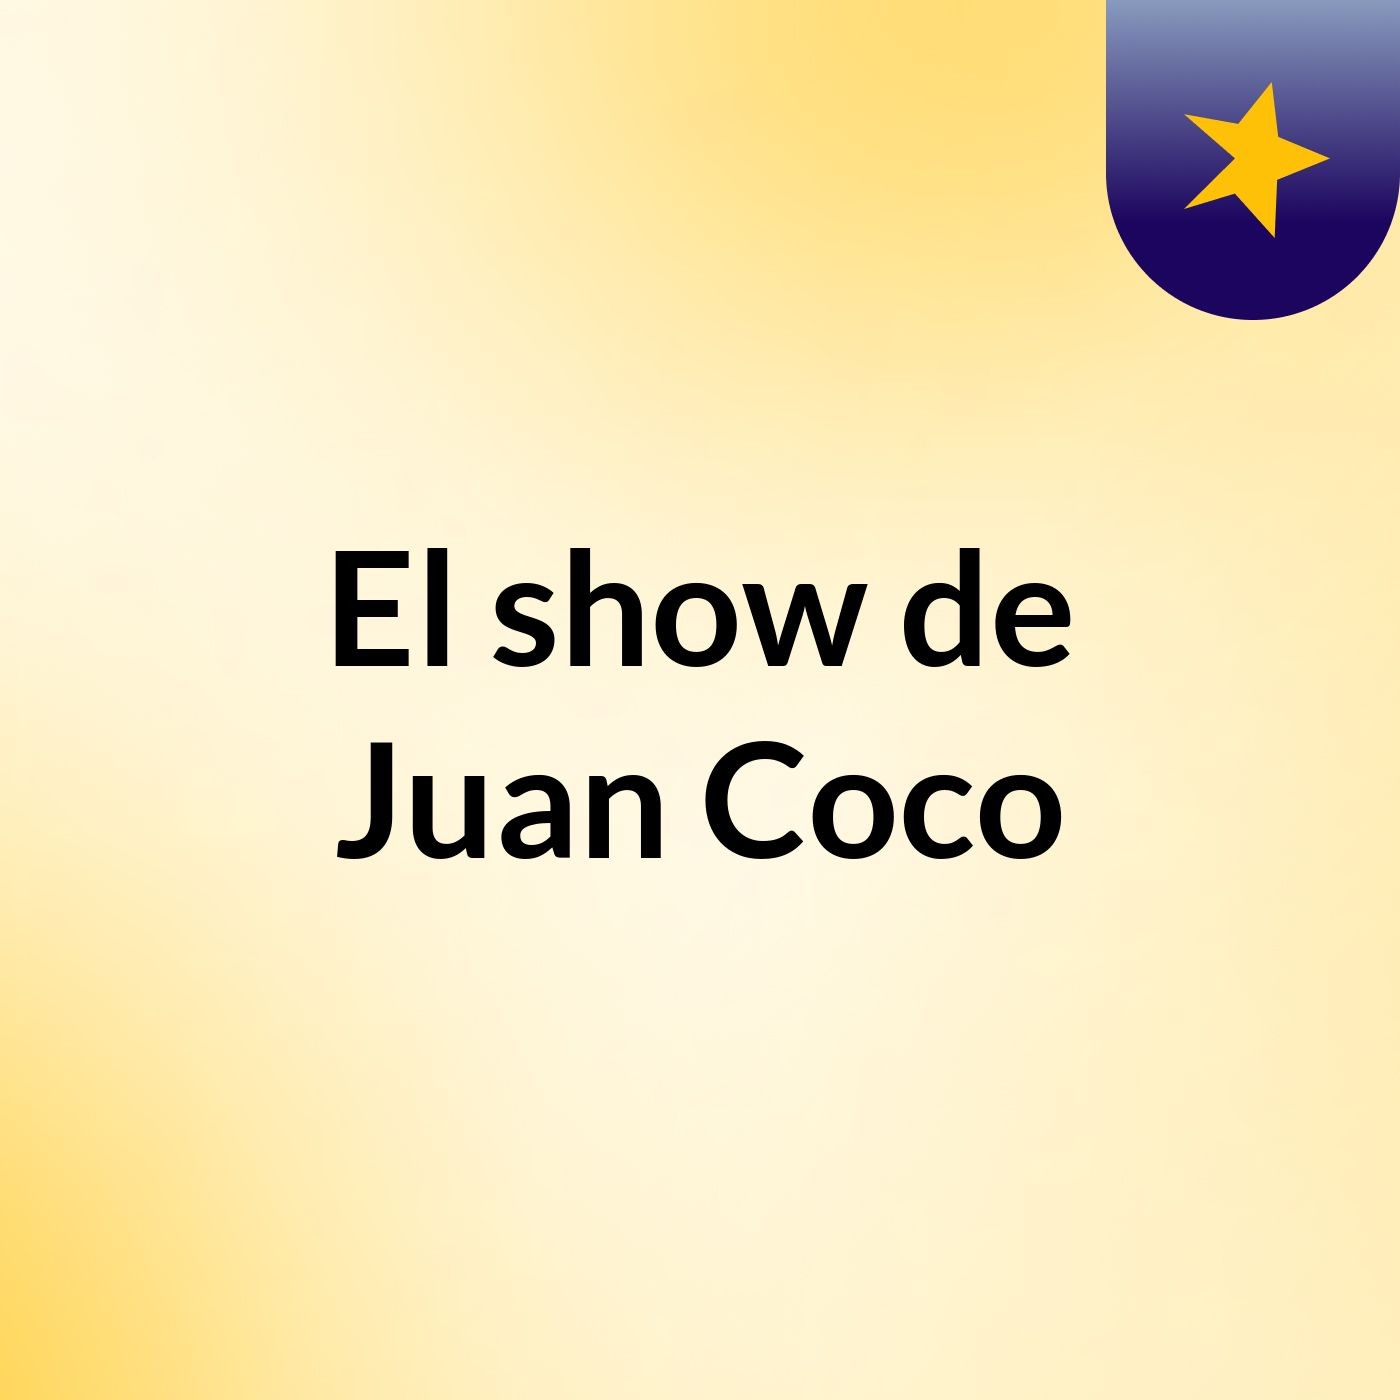 El show de Juan Coco